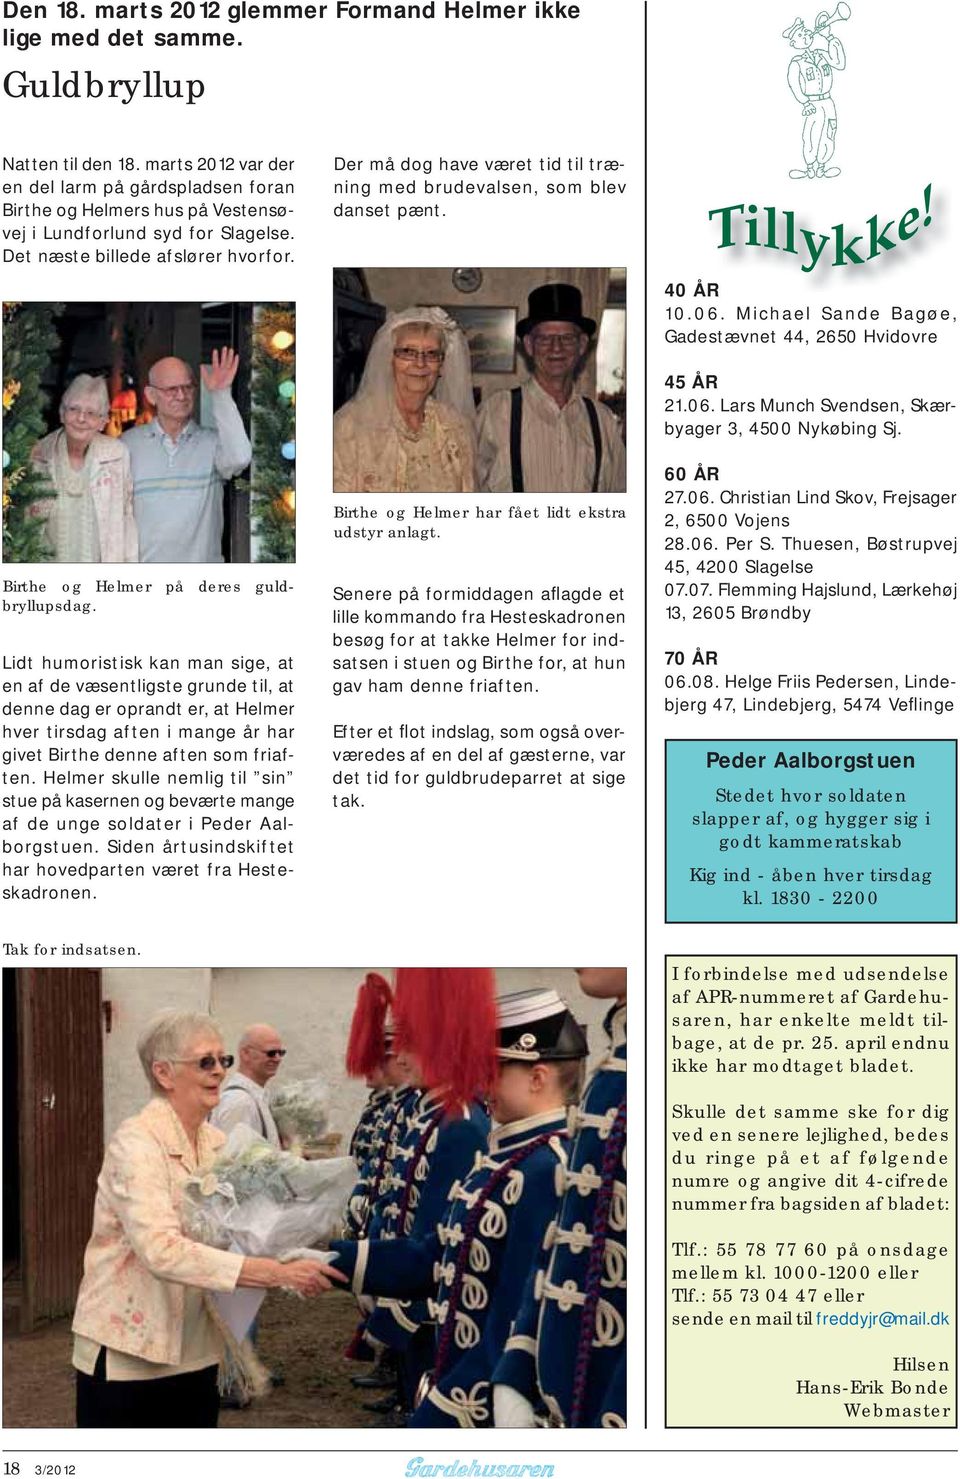 presse Motley i mellemtiden Gardehusaren Nr. 3 - Juni årgang - PDF Free Download